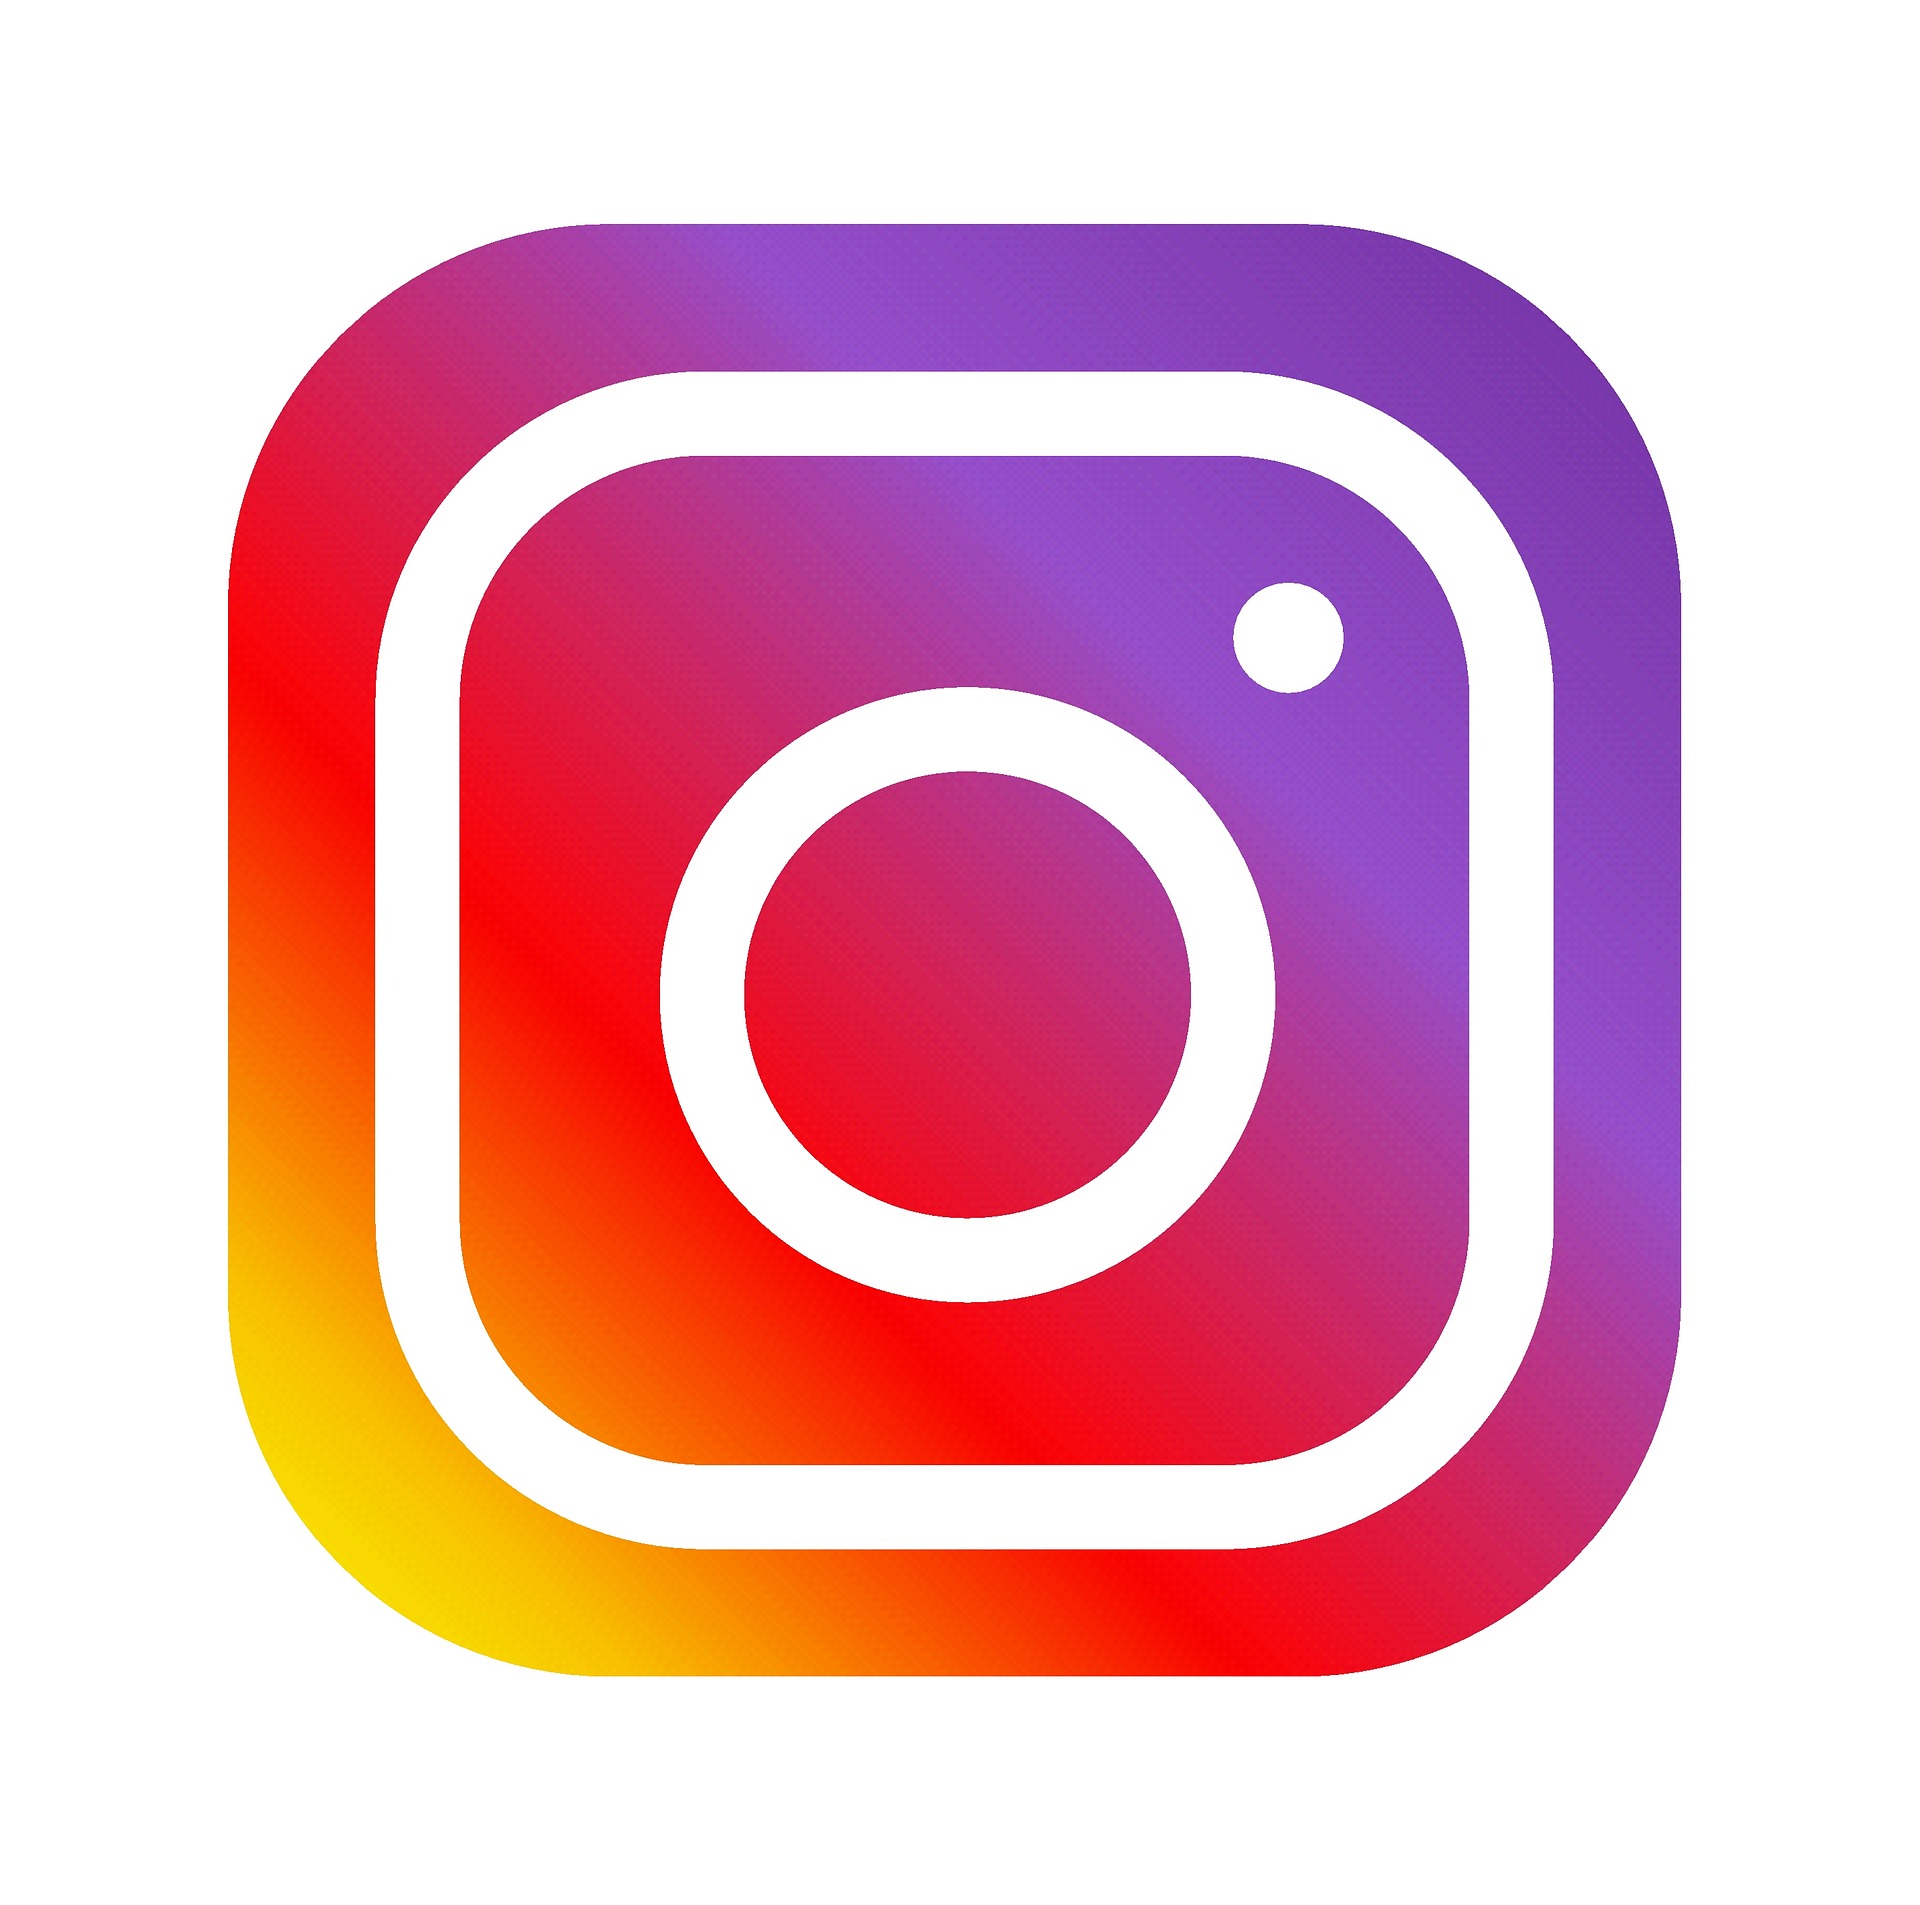 instagram-